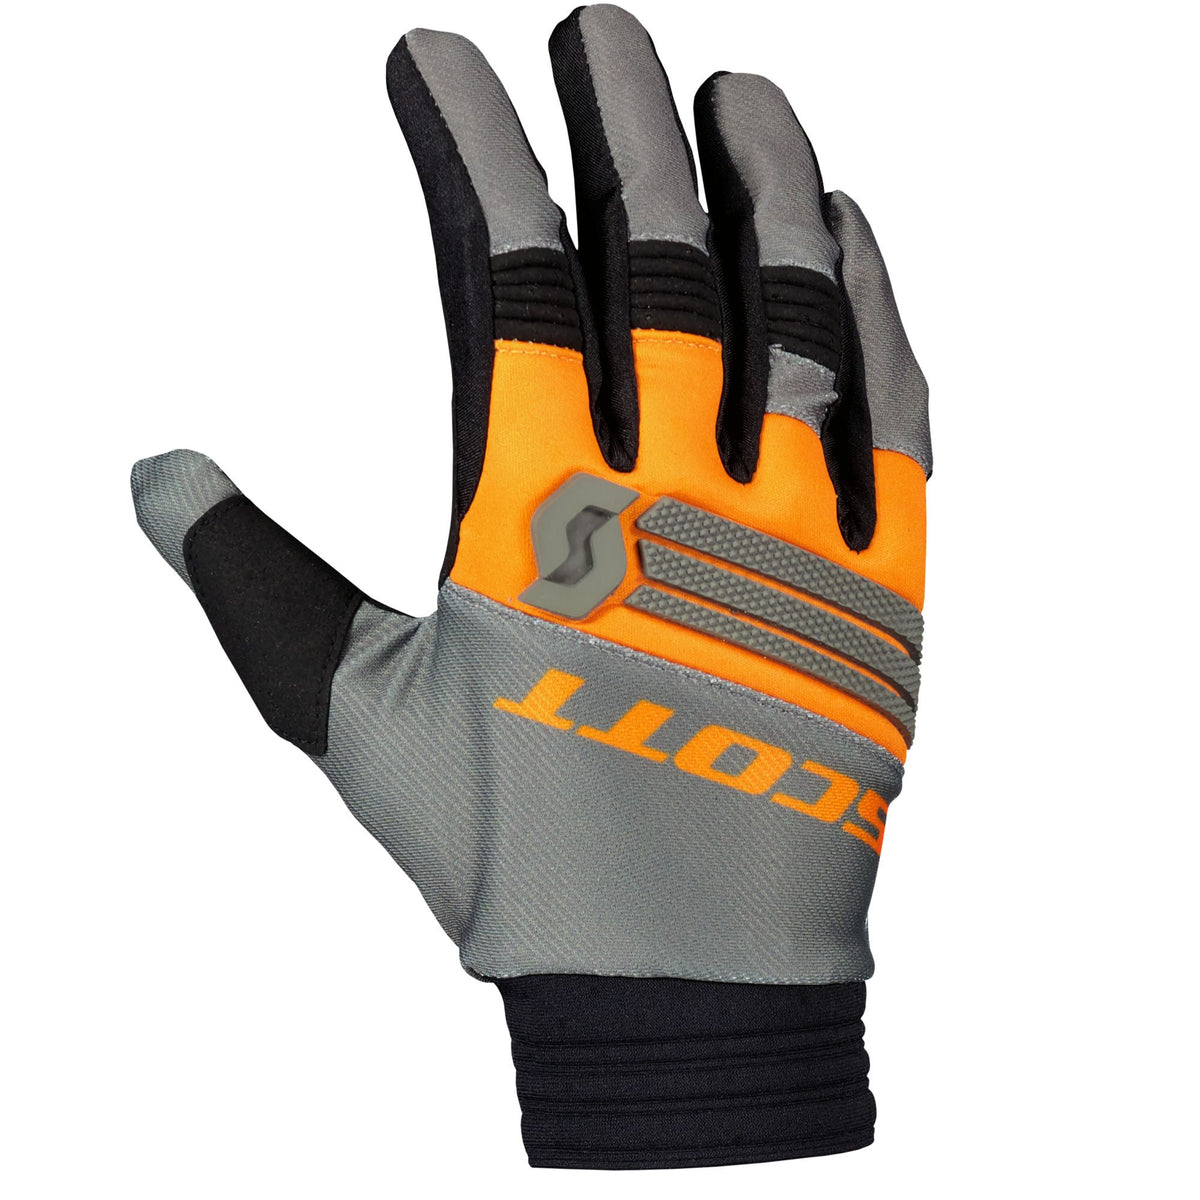 Scott X-Plore Gloves